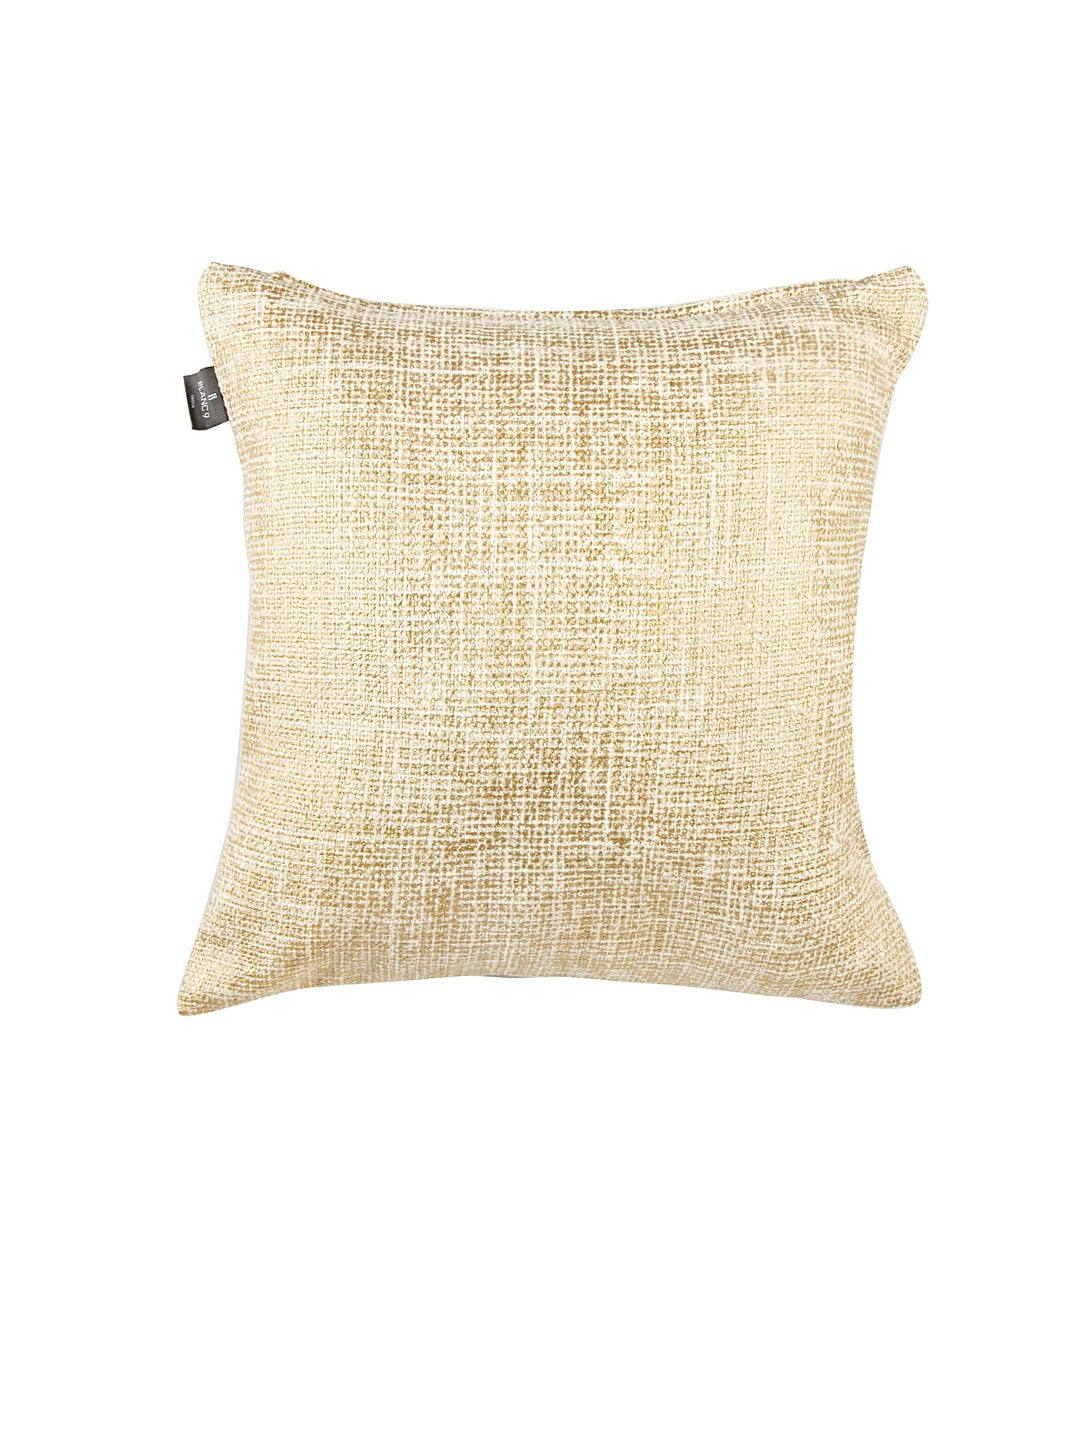 Blanc9 Bling Gold Foil Cushion Cover